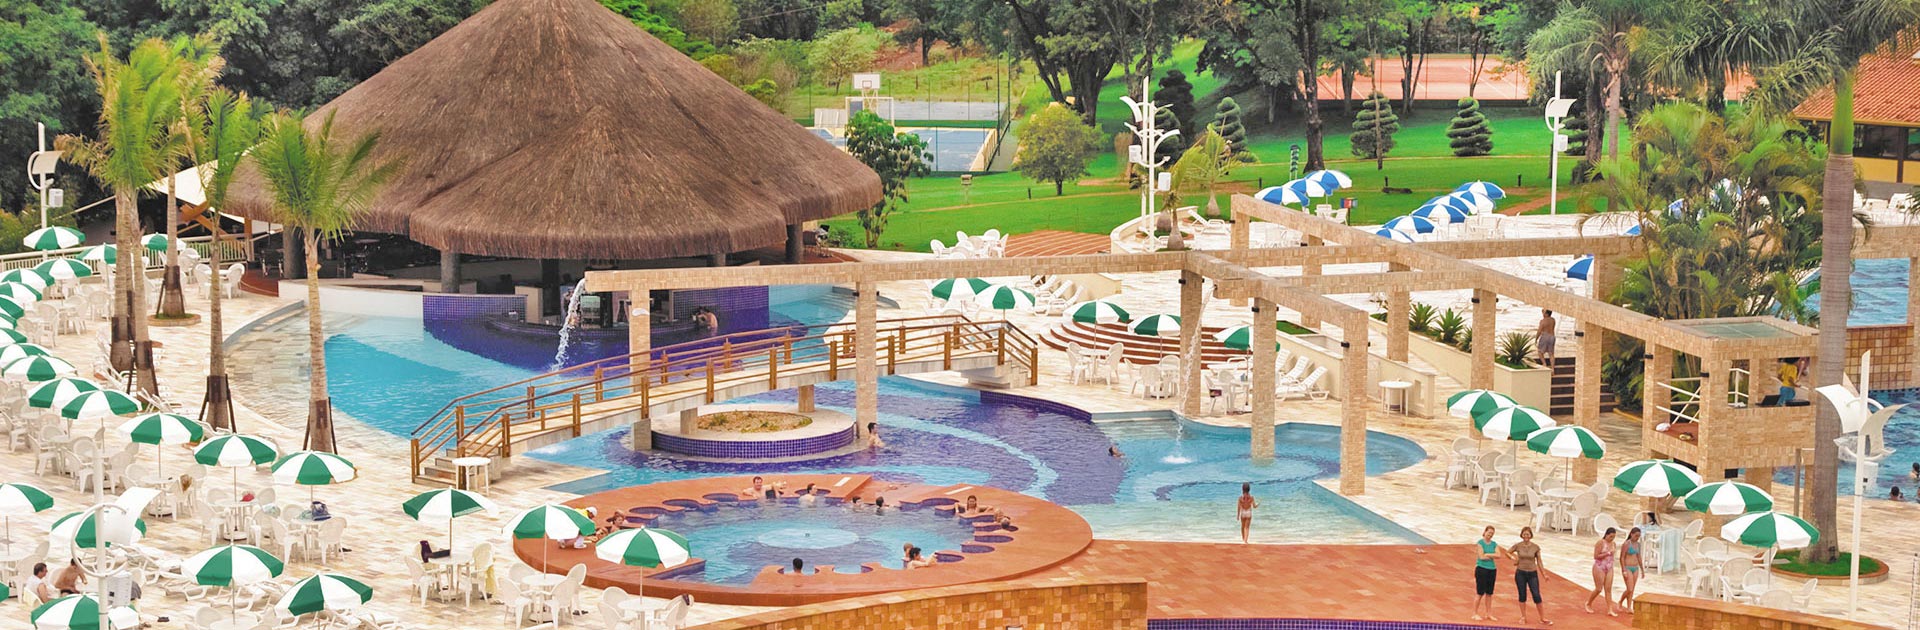 Aguativa Resort piscina geral